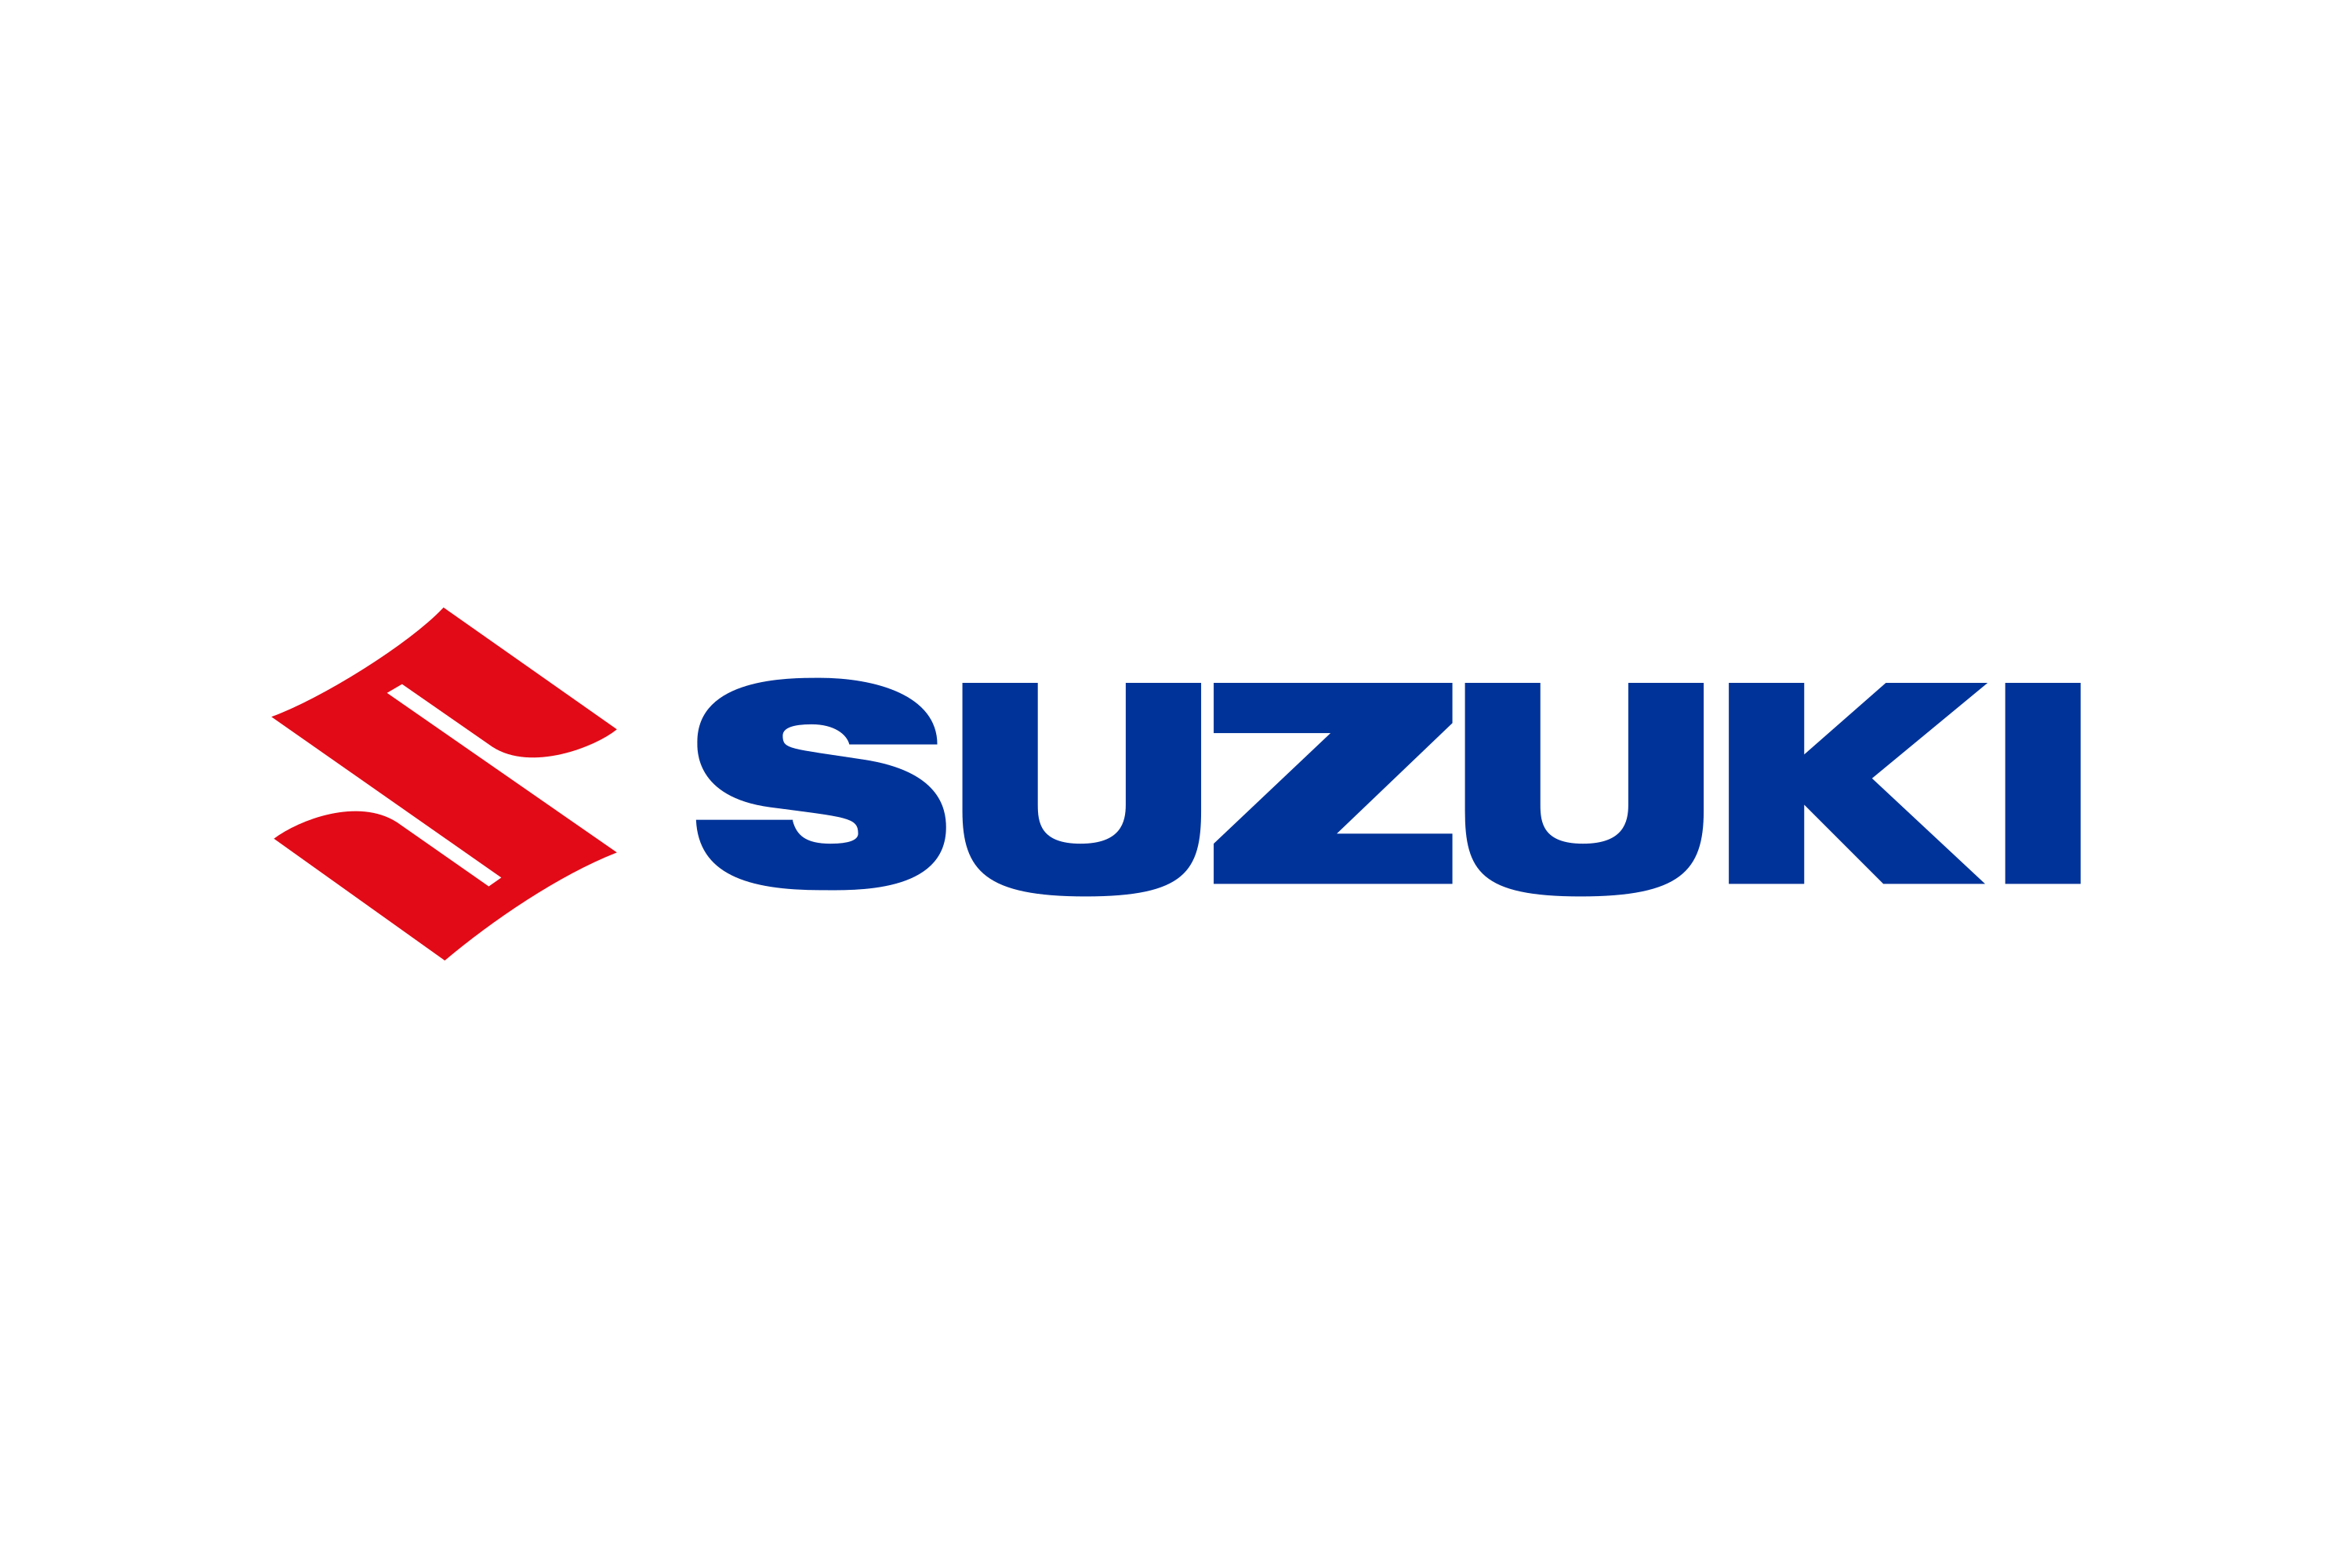 Download Suzuki Logo in SVG Vector or PNG File Format - Logo.wine